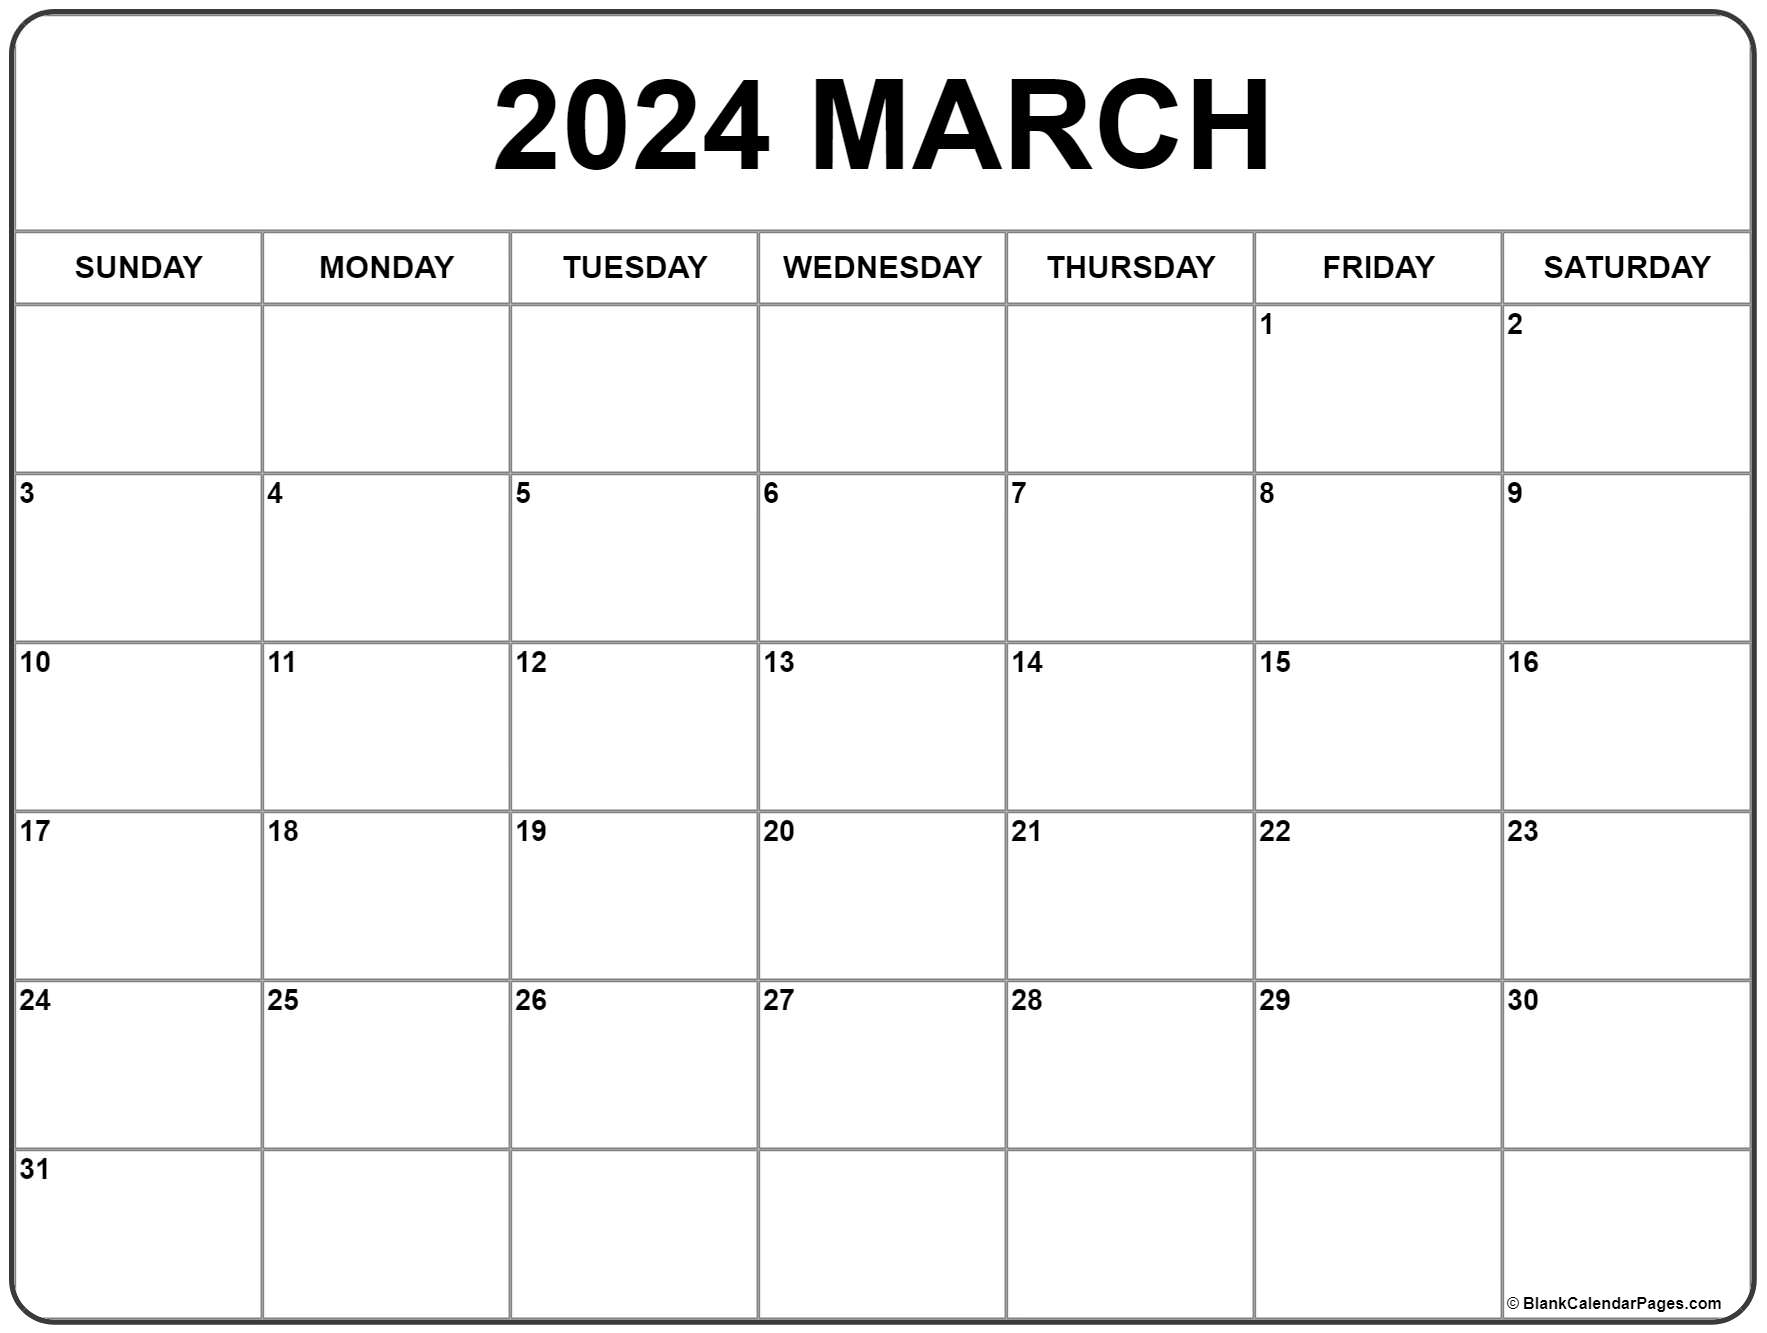 Blank Calendar Template 2022 March.March 2022 Calendar Free Printable Calendar